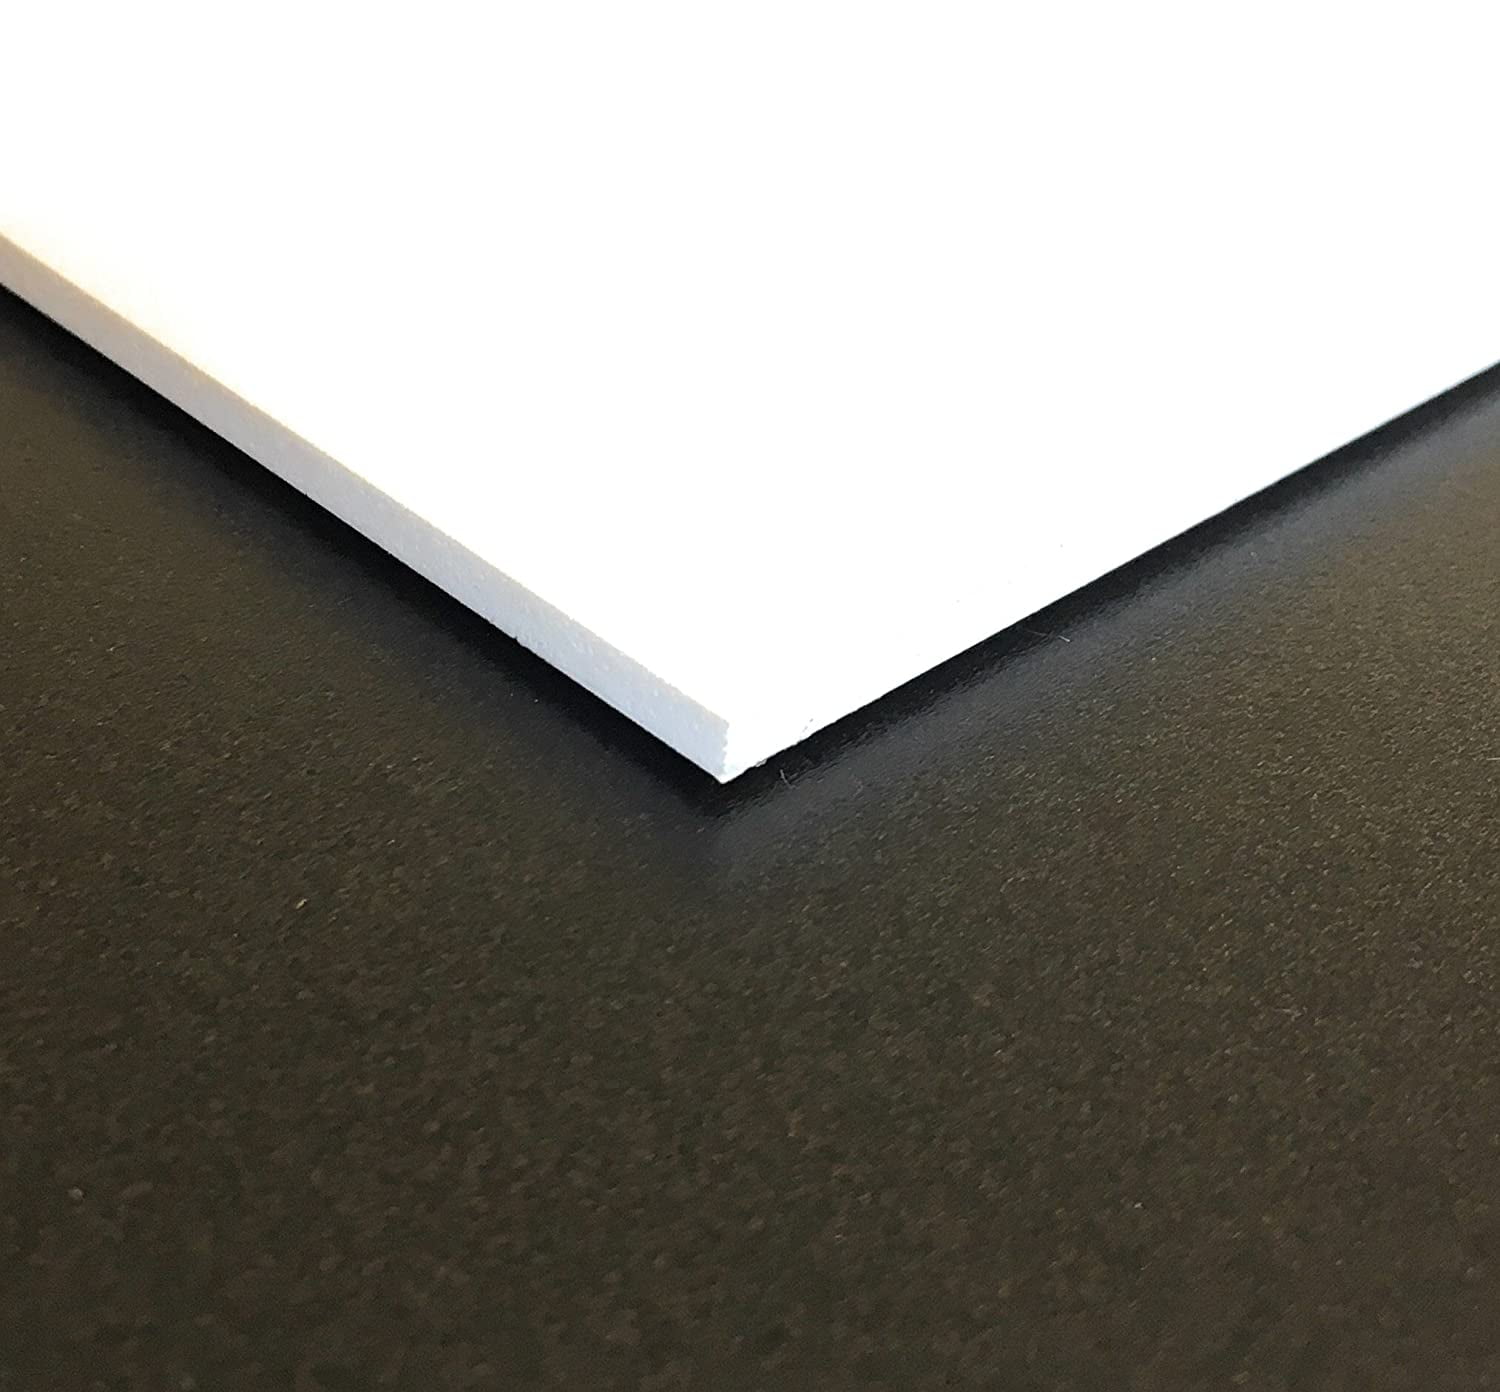 PVC Expanded Plastic Sheet 3mm White Color 1/8" x 24" x 48" 